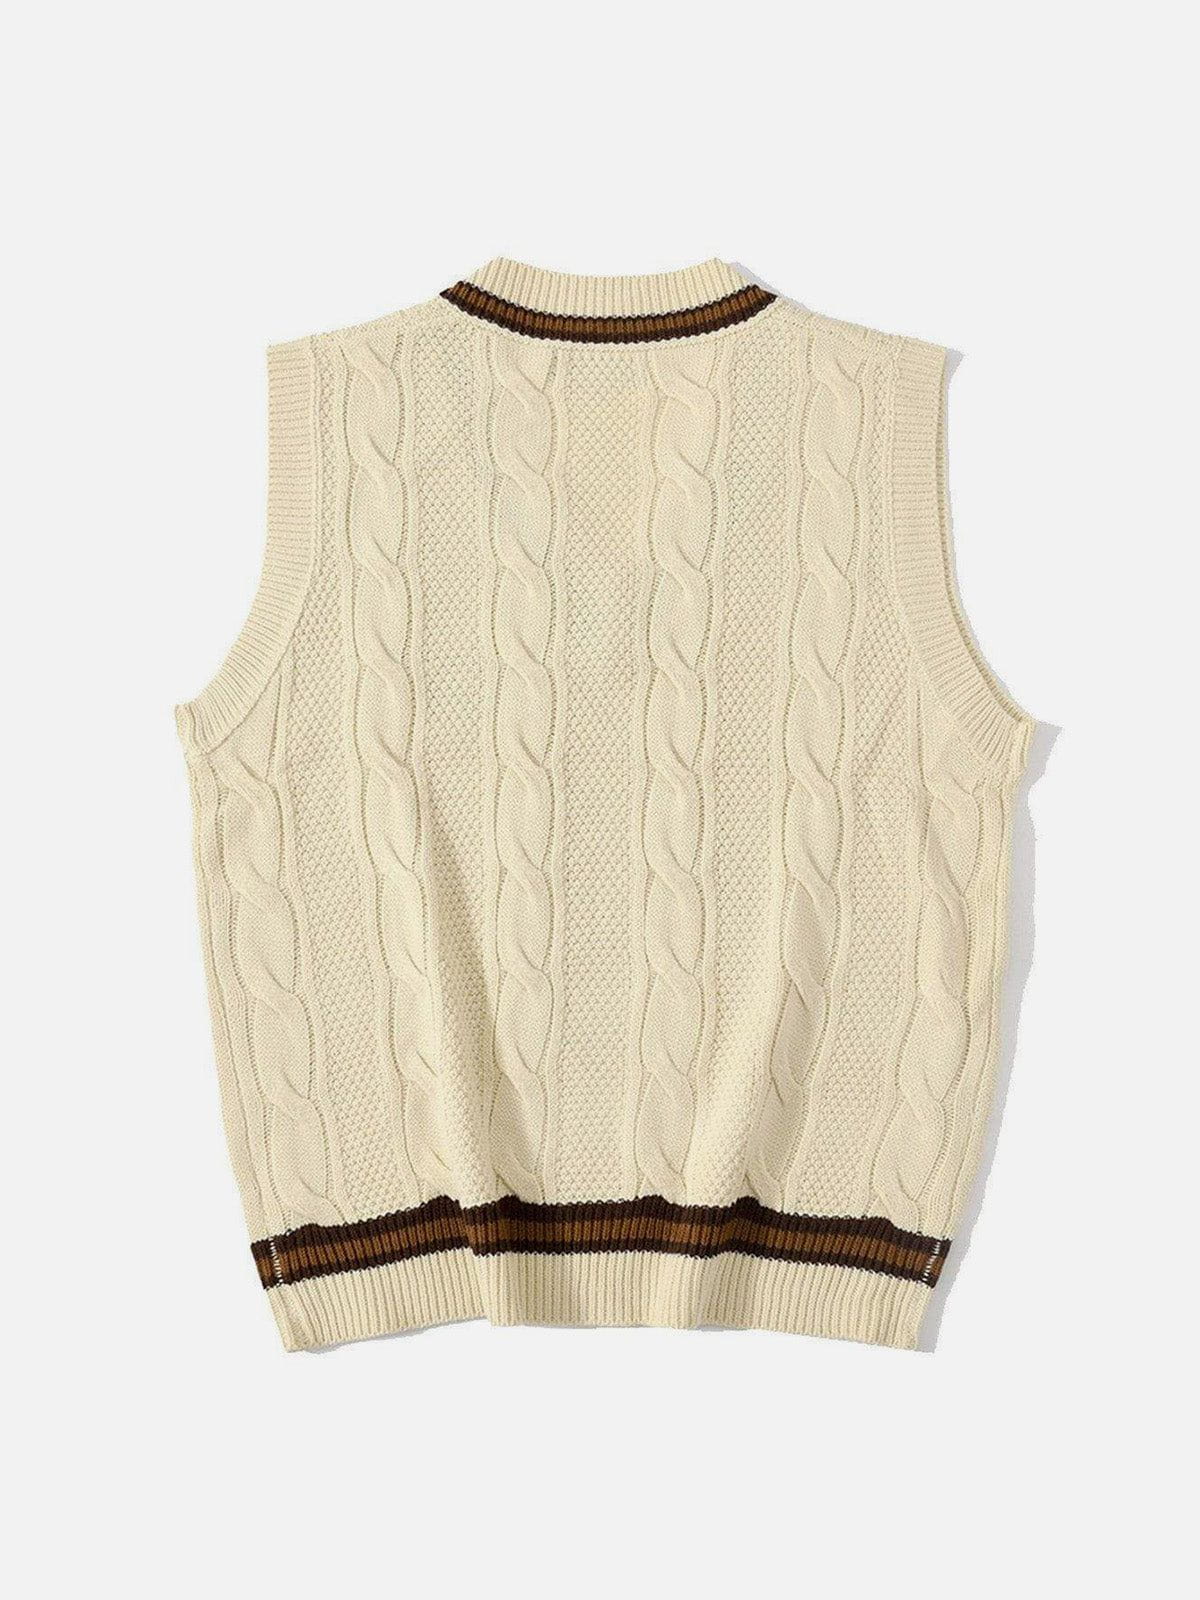 Aelfric Eden Vintage Preppy Style Knit Sweater Vest – Aelfric eden